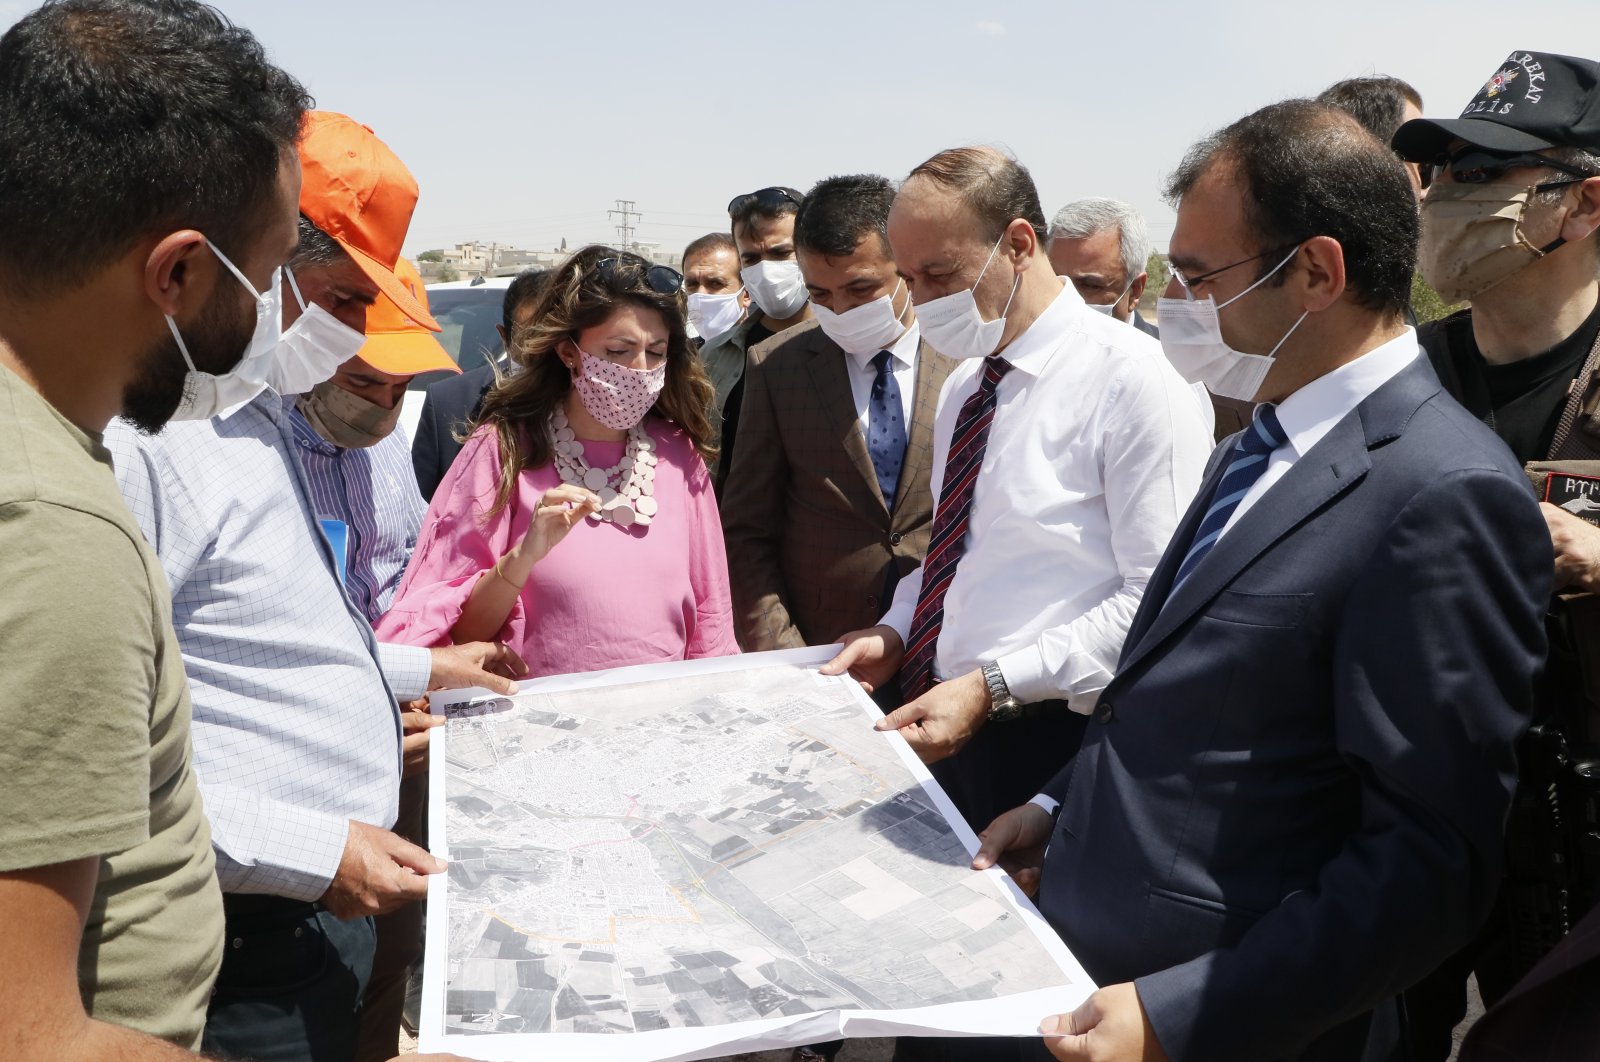 Şanlıurfa Governor Abdullah Erin (second right), inspects the construction site of the customs gate that links Syria's Ras al-Ayn to Turkey's Şanlıurfa, June 19, 2020 (AA Photo)